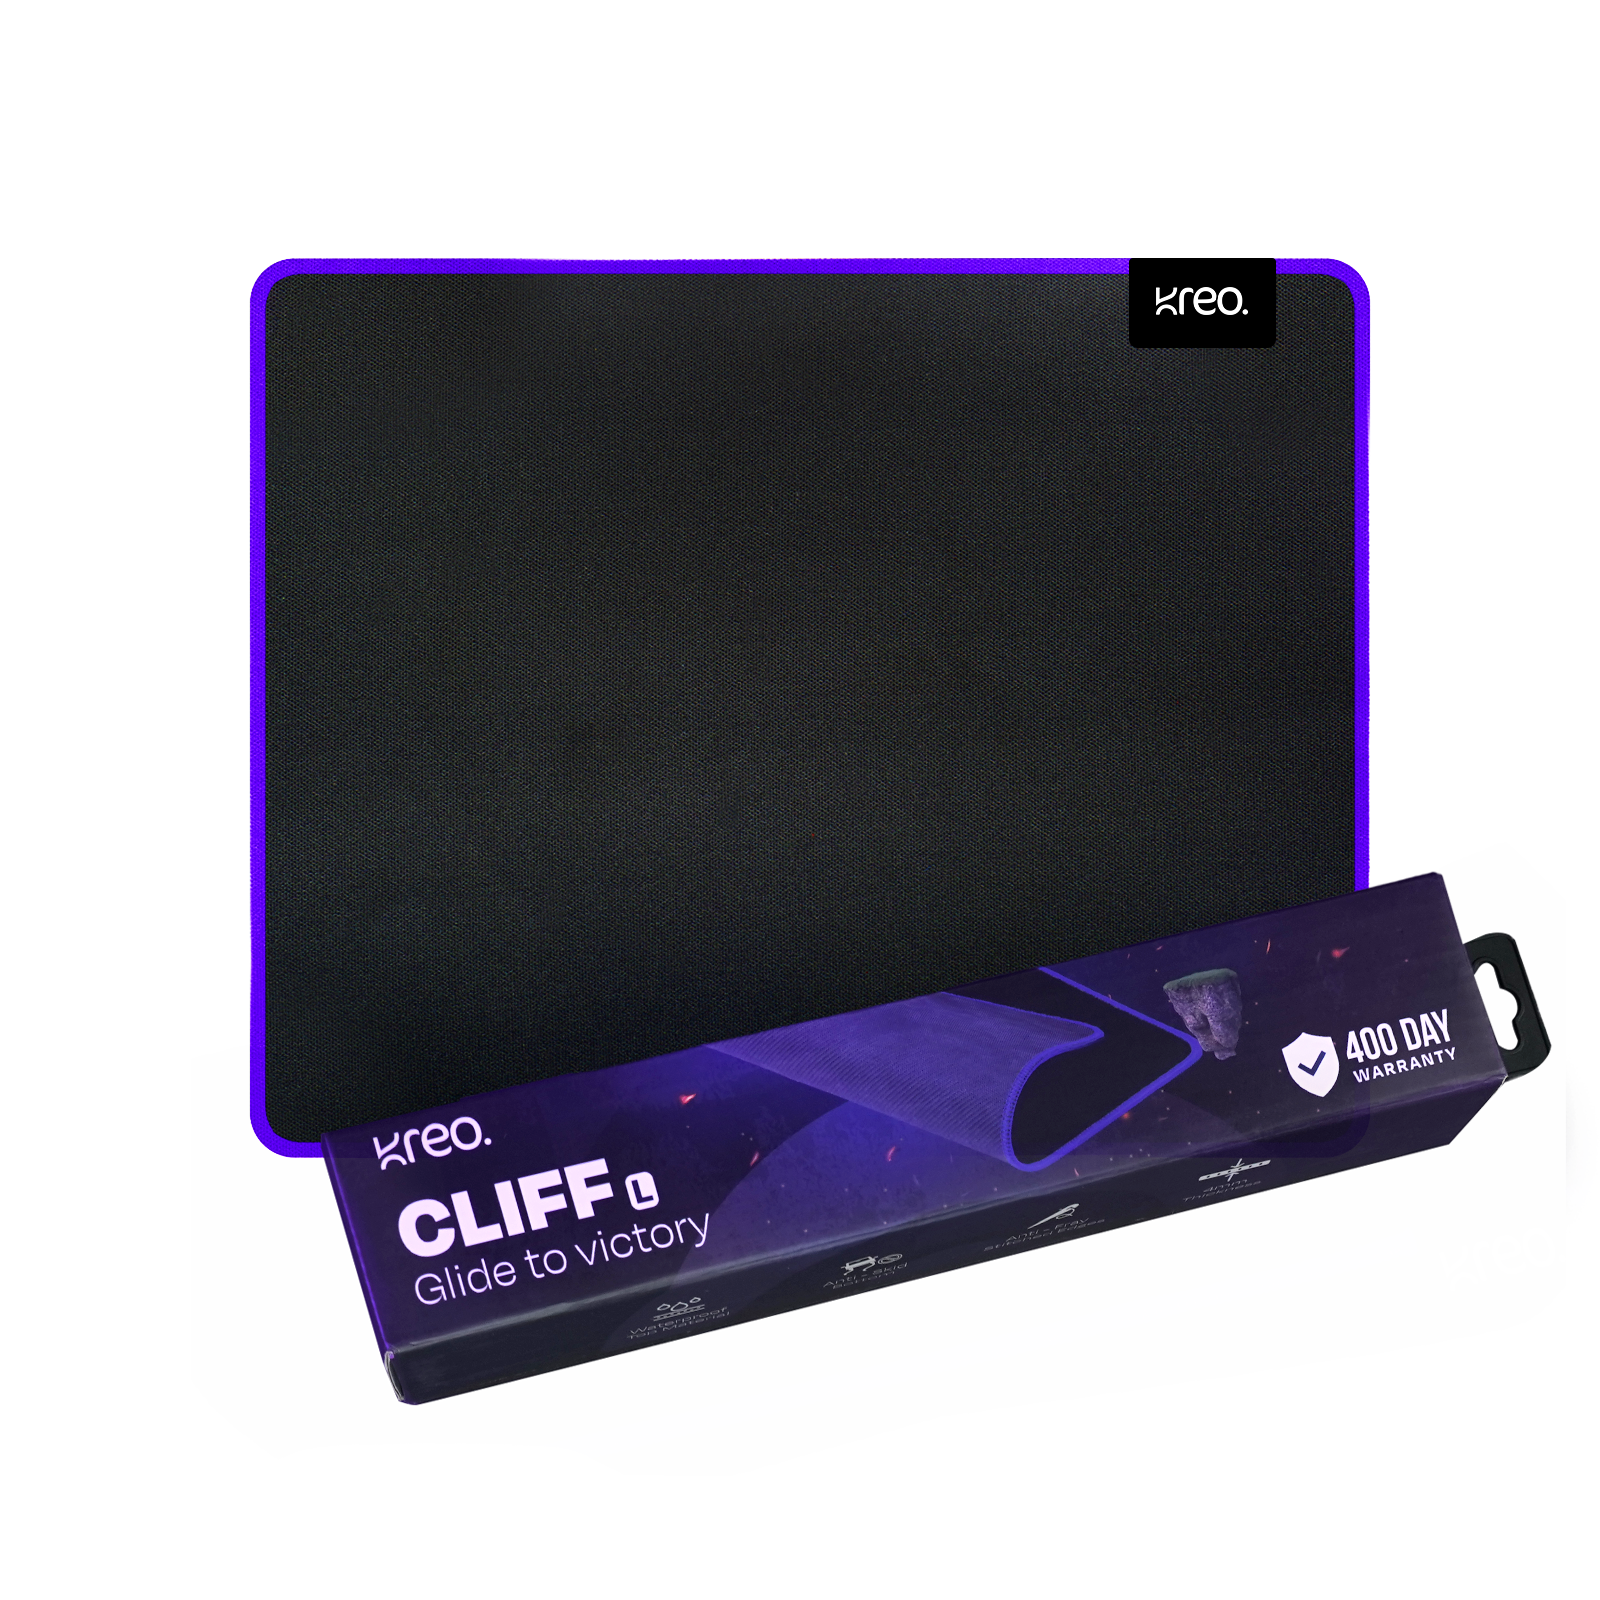 Cliff Gaming MousePad Kreo